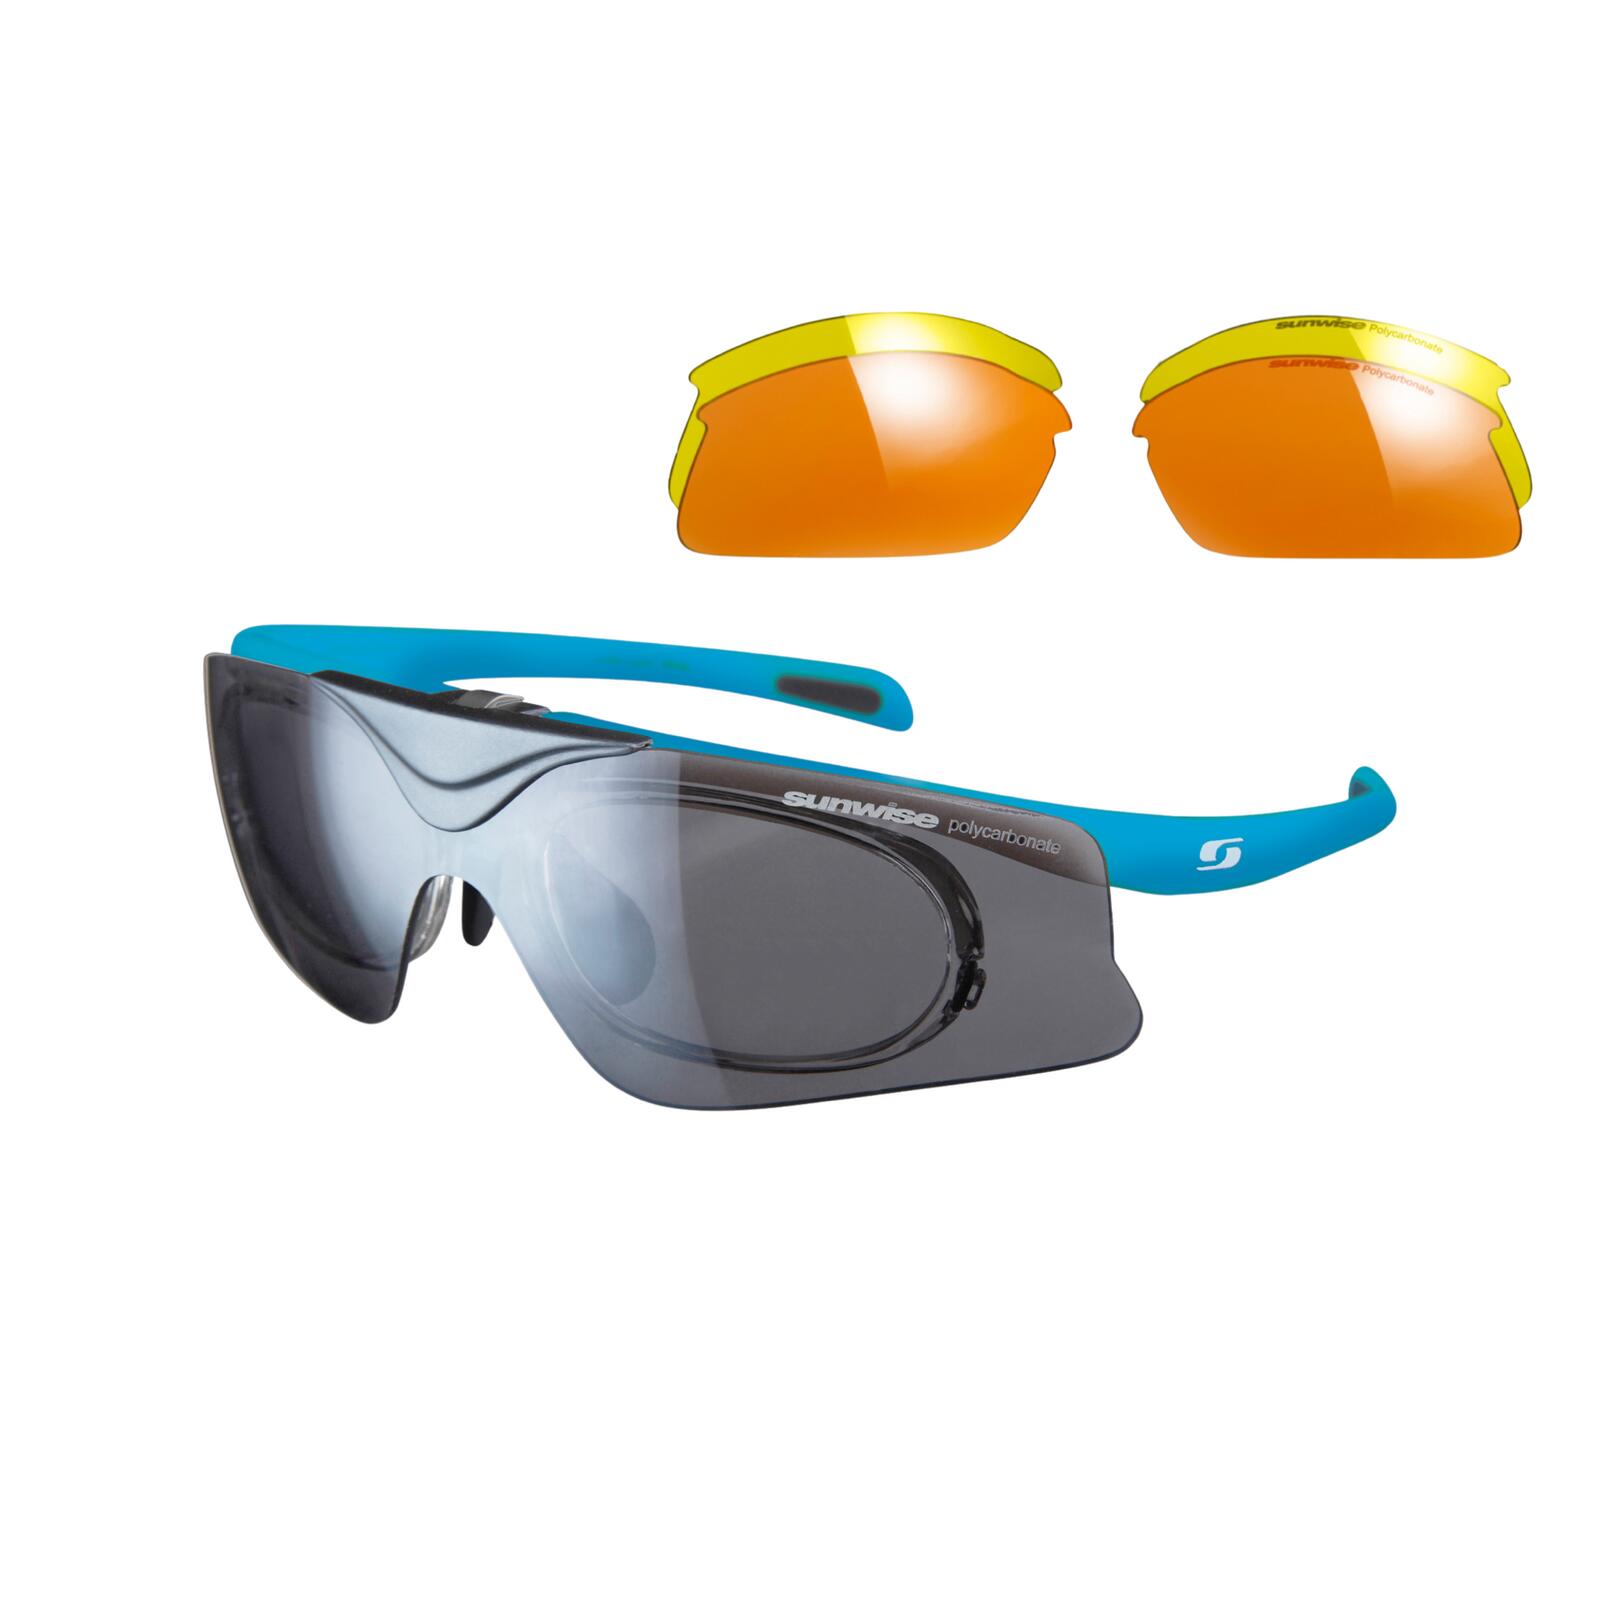 SUNWISE Austin Prescription Sunglasses - Category 0-3